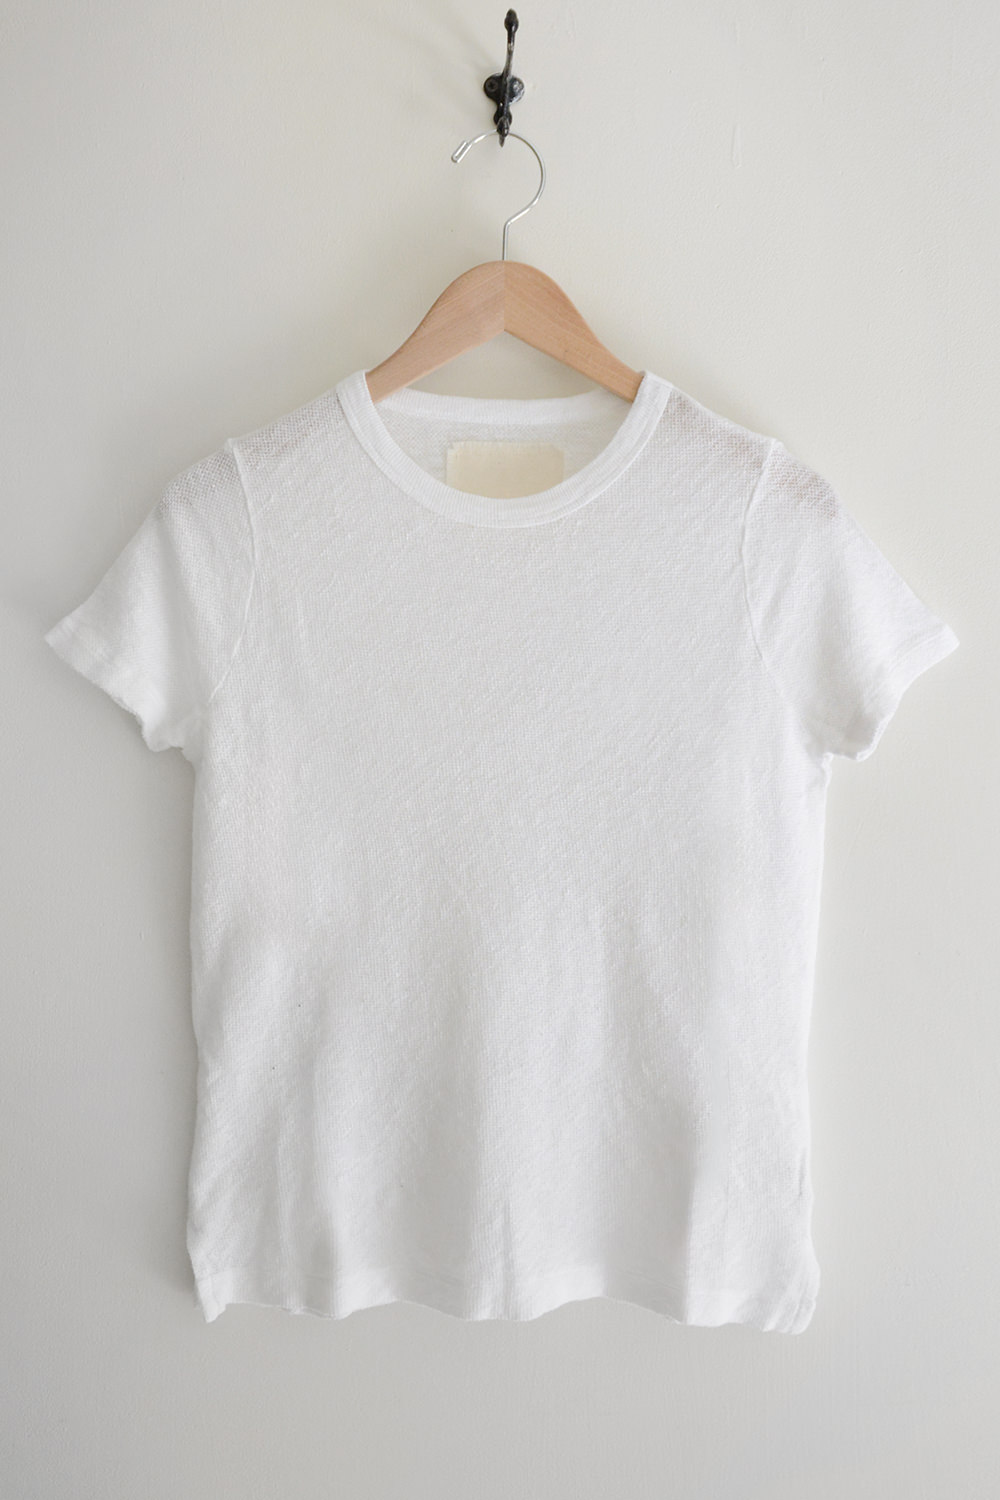 V::room　ヴィルーム　ウィメンズ　 Hemp T-shirt　麻Tシャツ